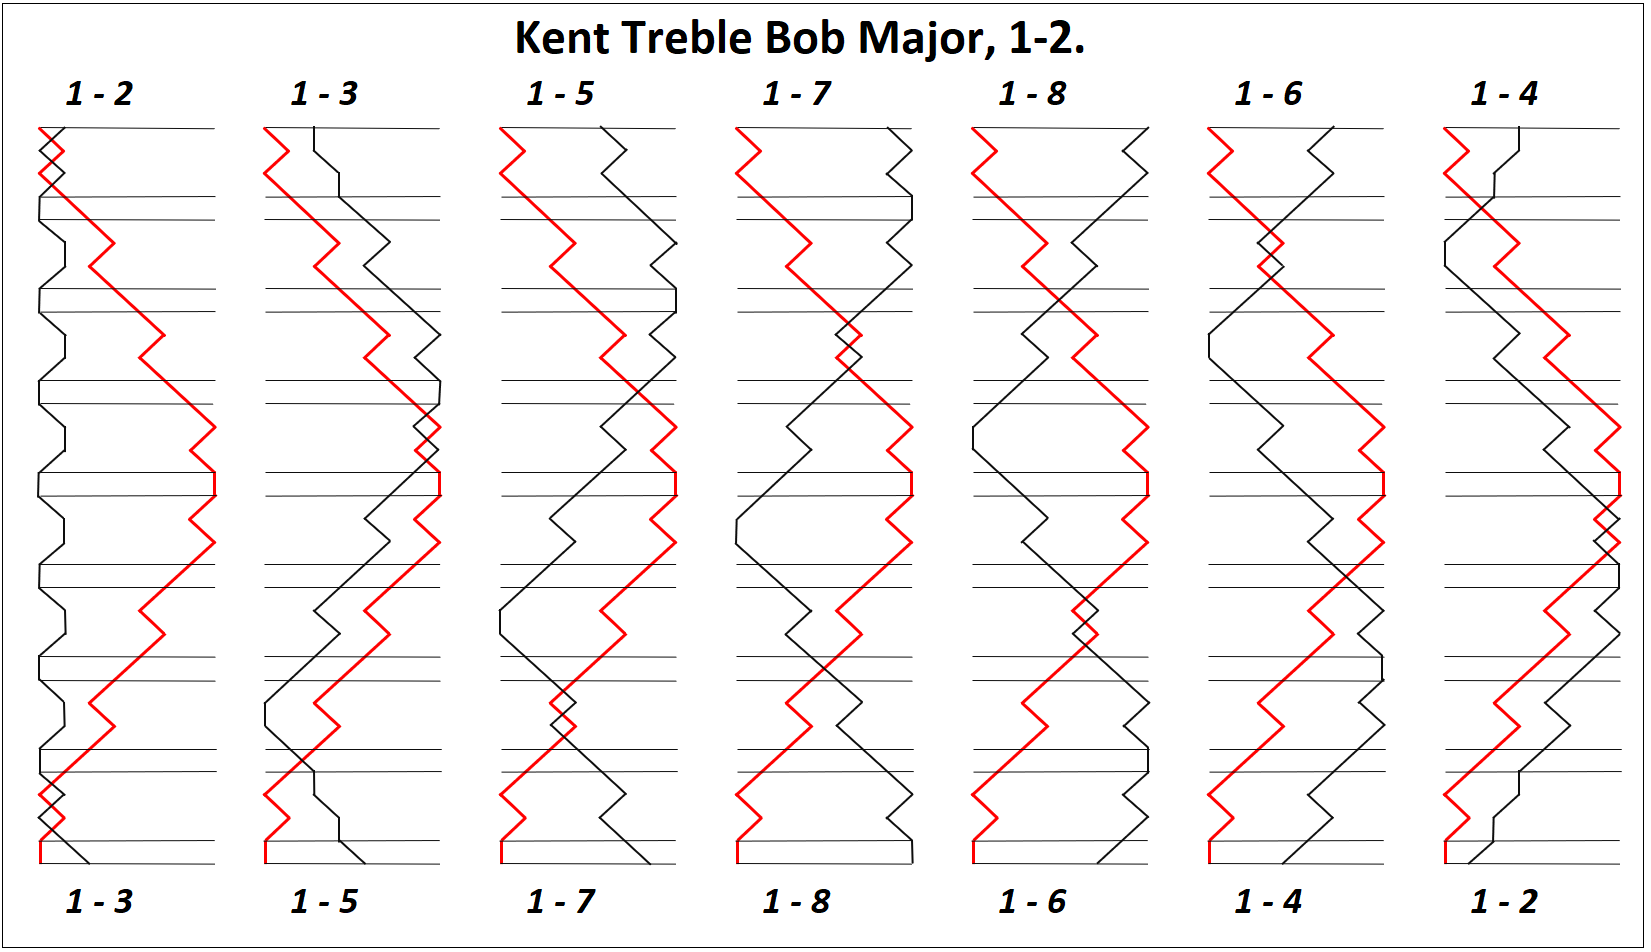 Kent Treble Bob Major Double line for 1-2